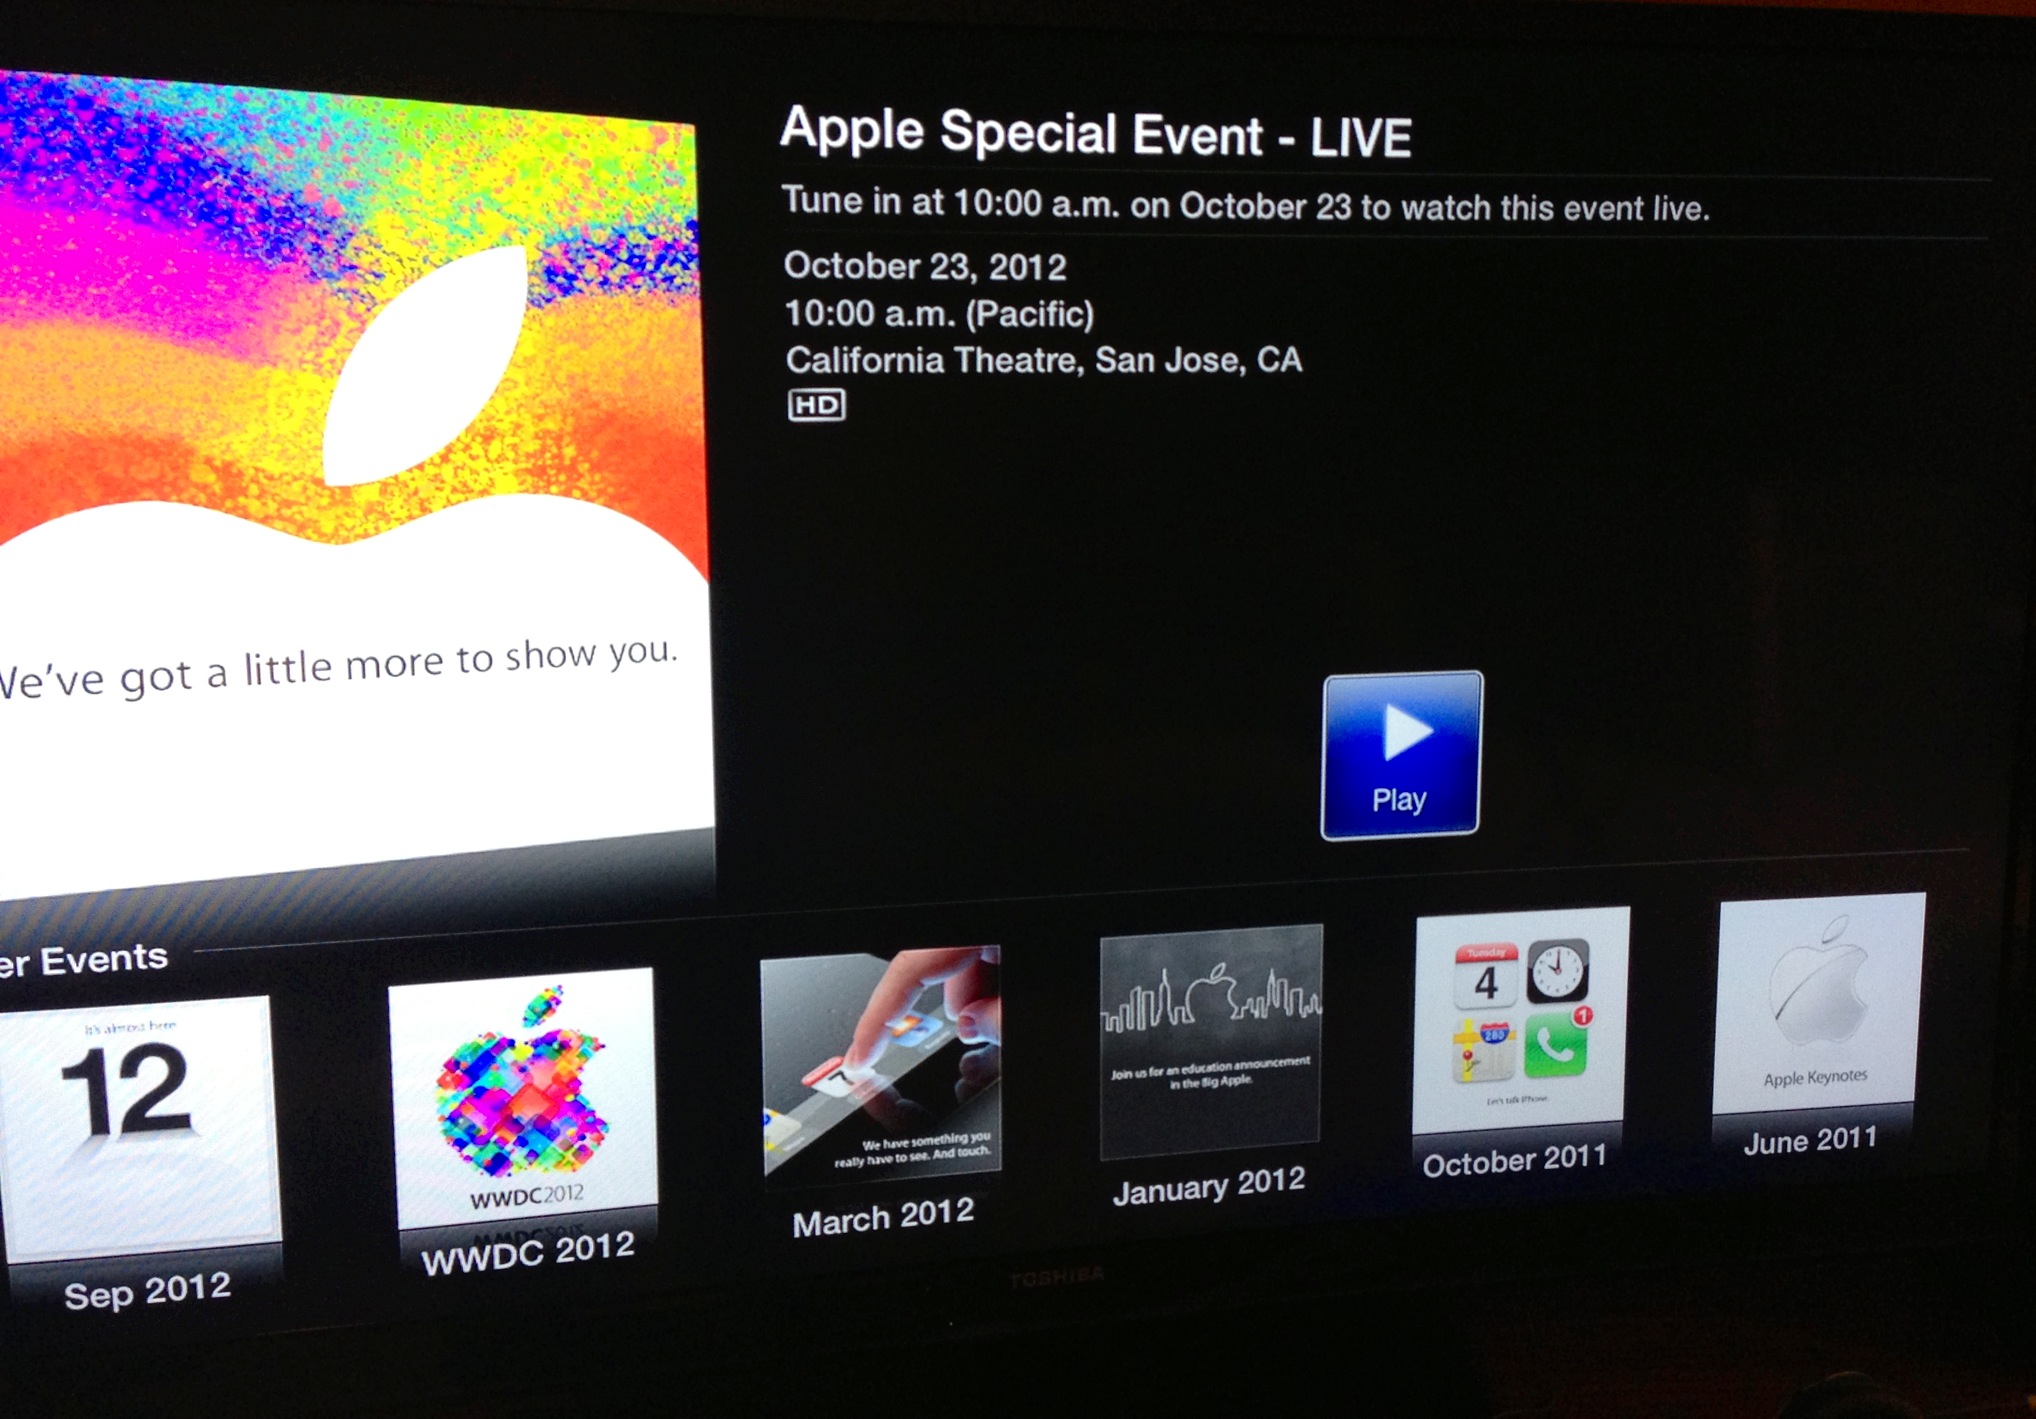 How to Watch iPad Mini Event Live Apple TV